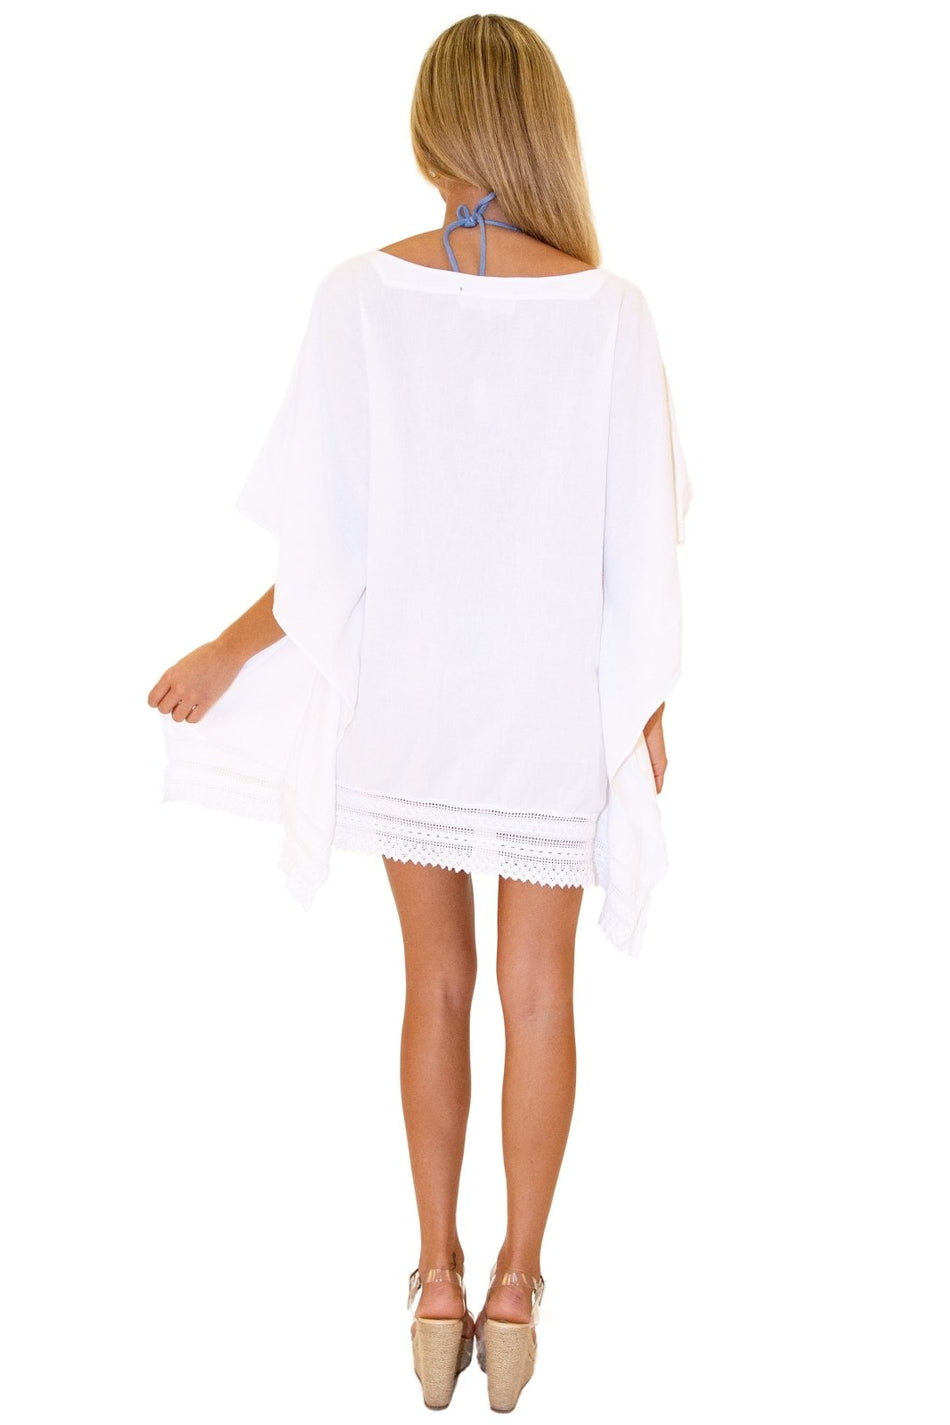 'Celeste' Boho Tunic Cover-Up White - Seaspice Resort Wear